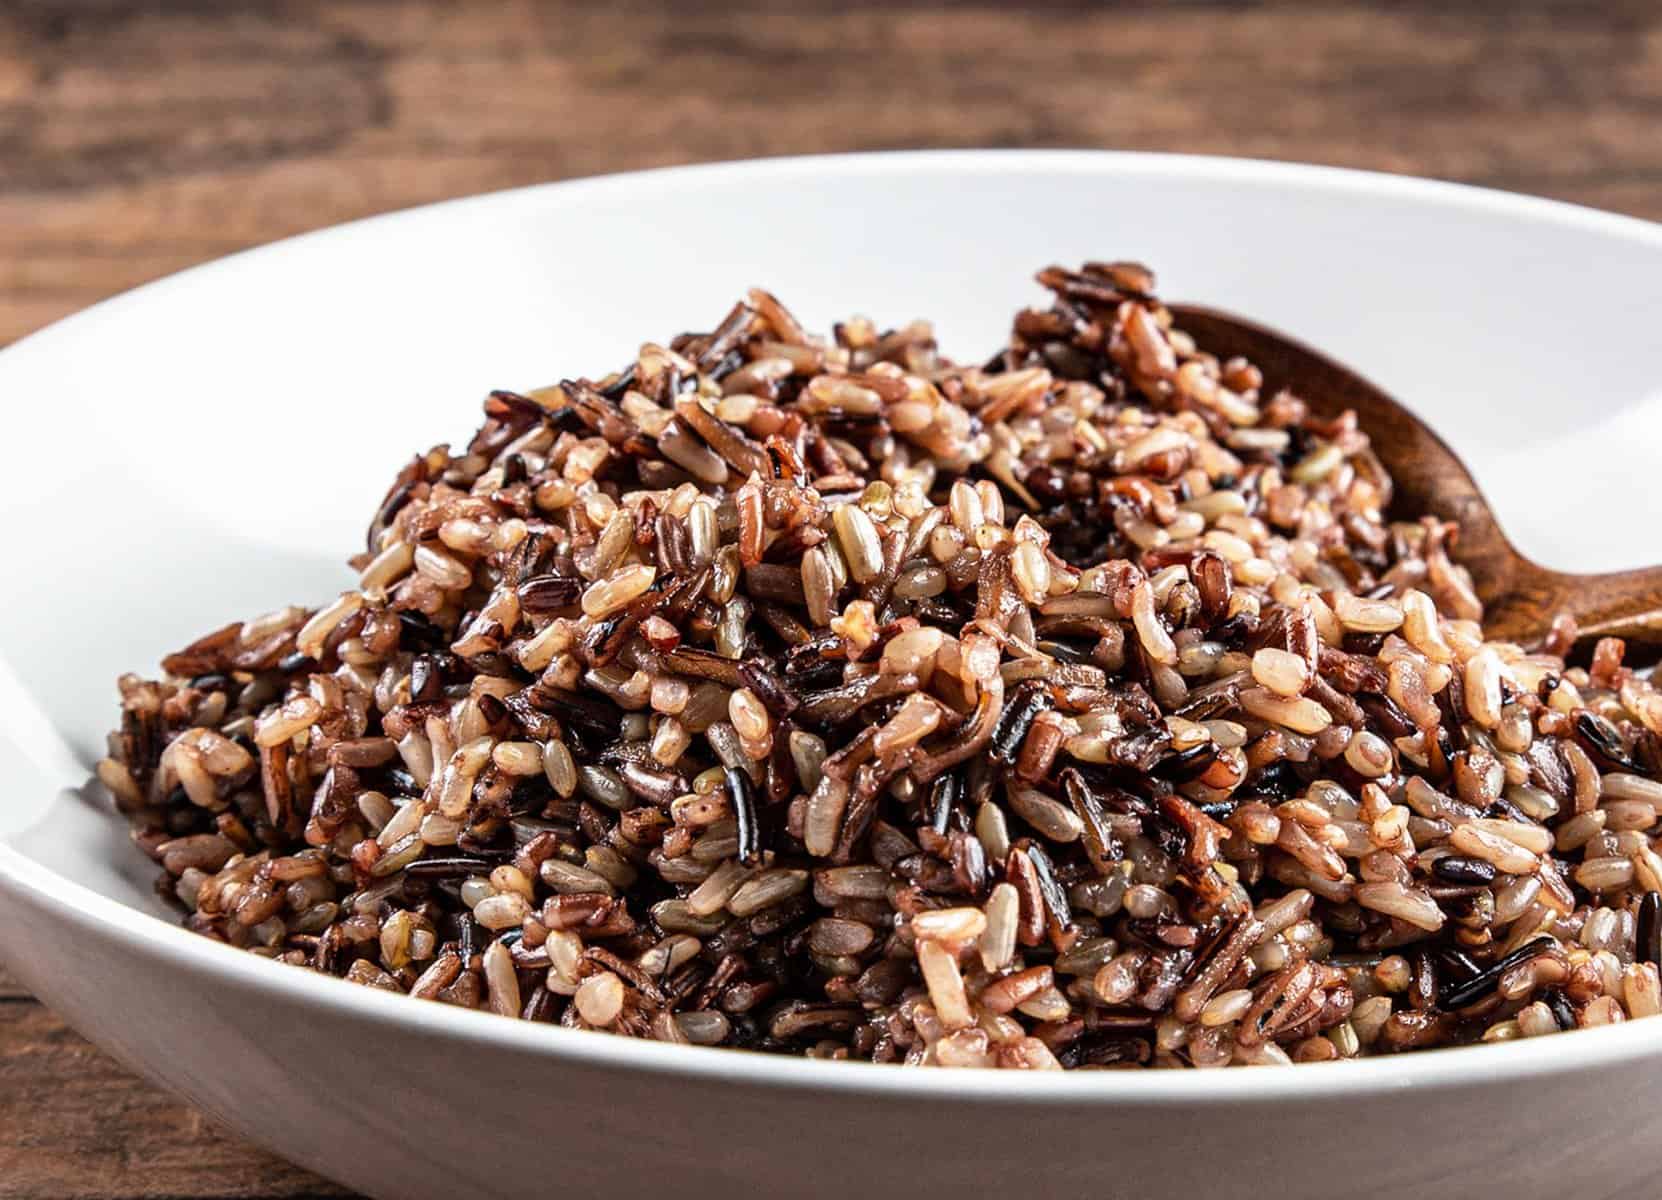 https://www.pressurecookrecipes.com/wp-content/uploads/2022/05/instant-pot-wild-rice-blend.jpg